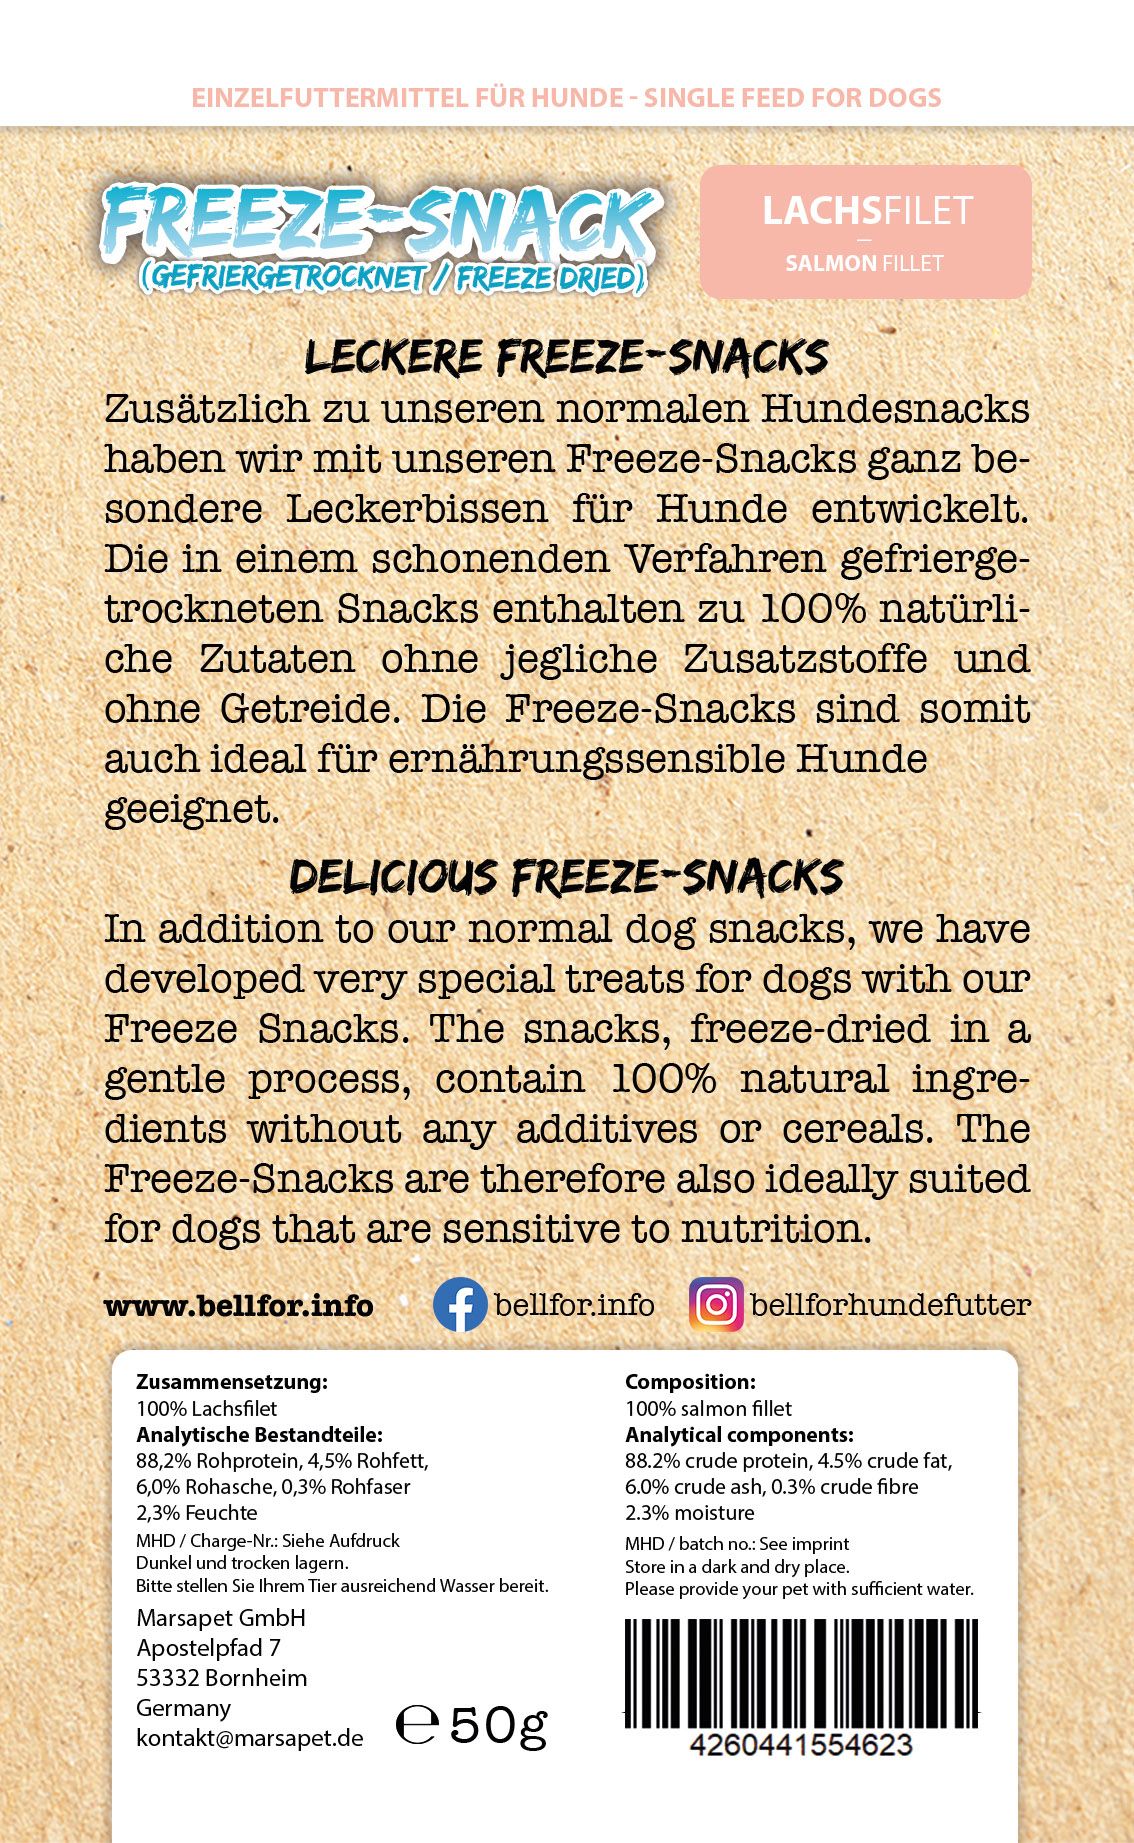 Bellfor Gesunder Freeze-Snack für Hunde - Lachsfilet (gefriergetrocknet)